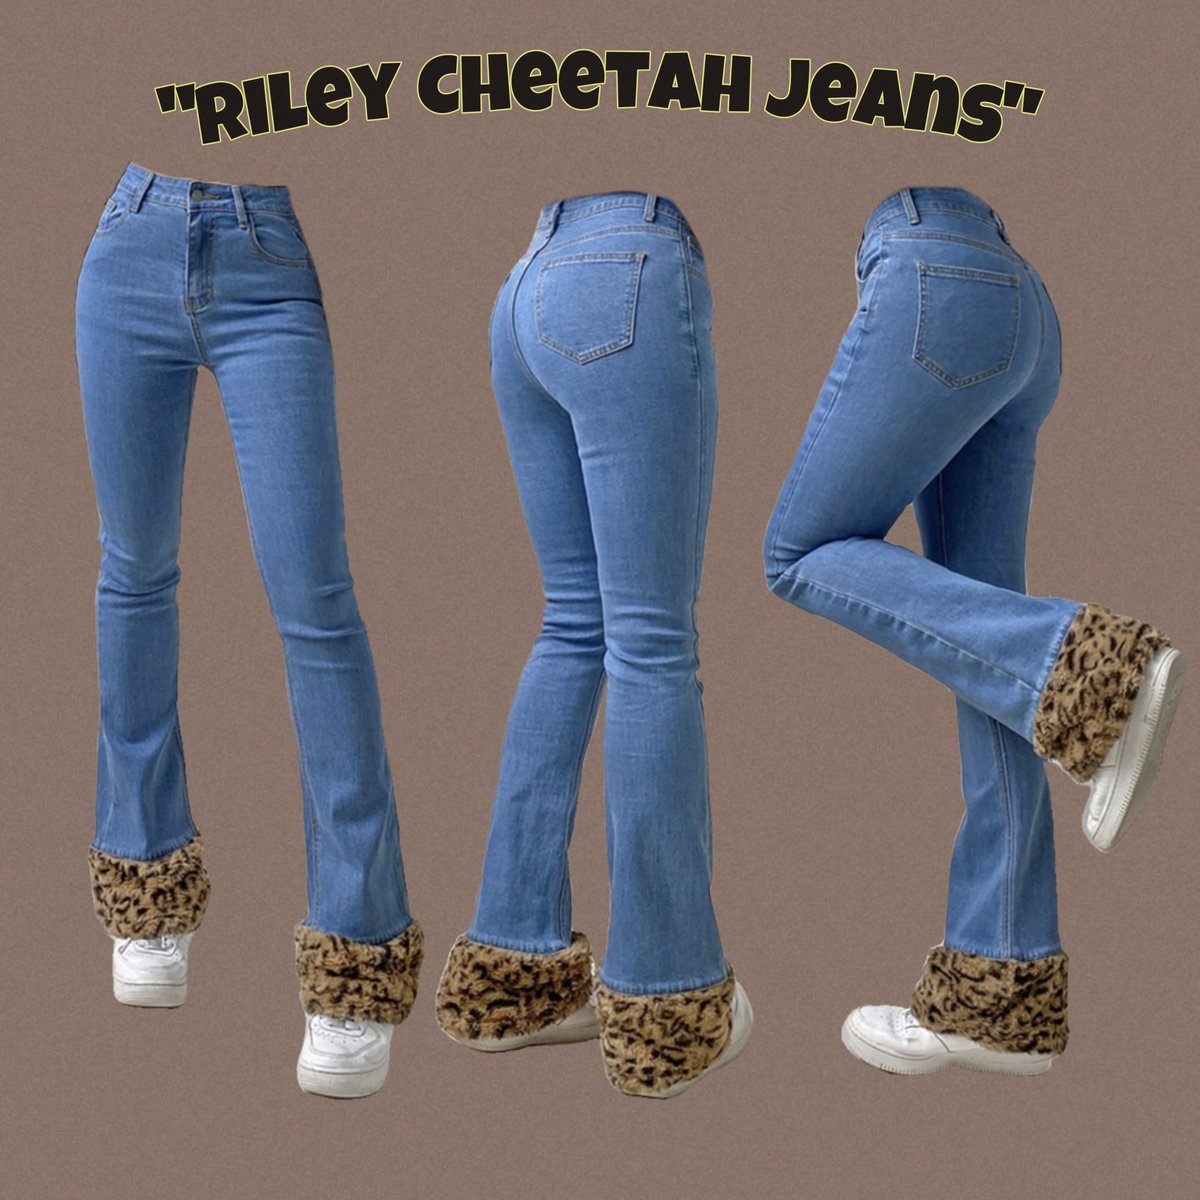 Image of Riley Cheetah Jeans